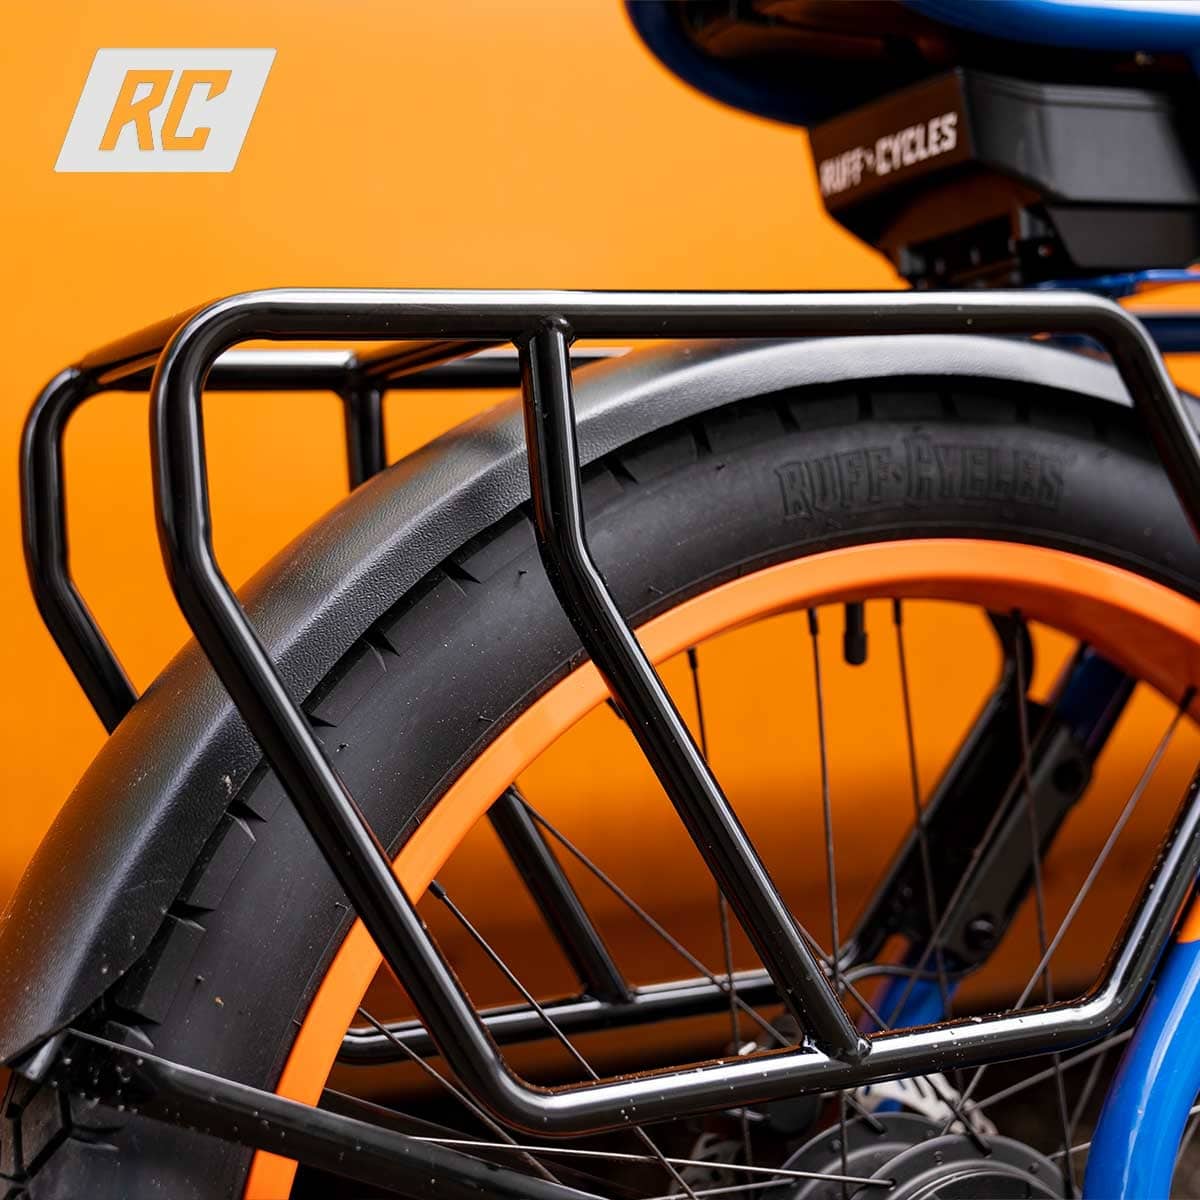 RUFF CYCLES Rear Rack for Biggie - Black